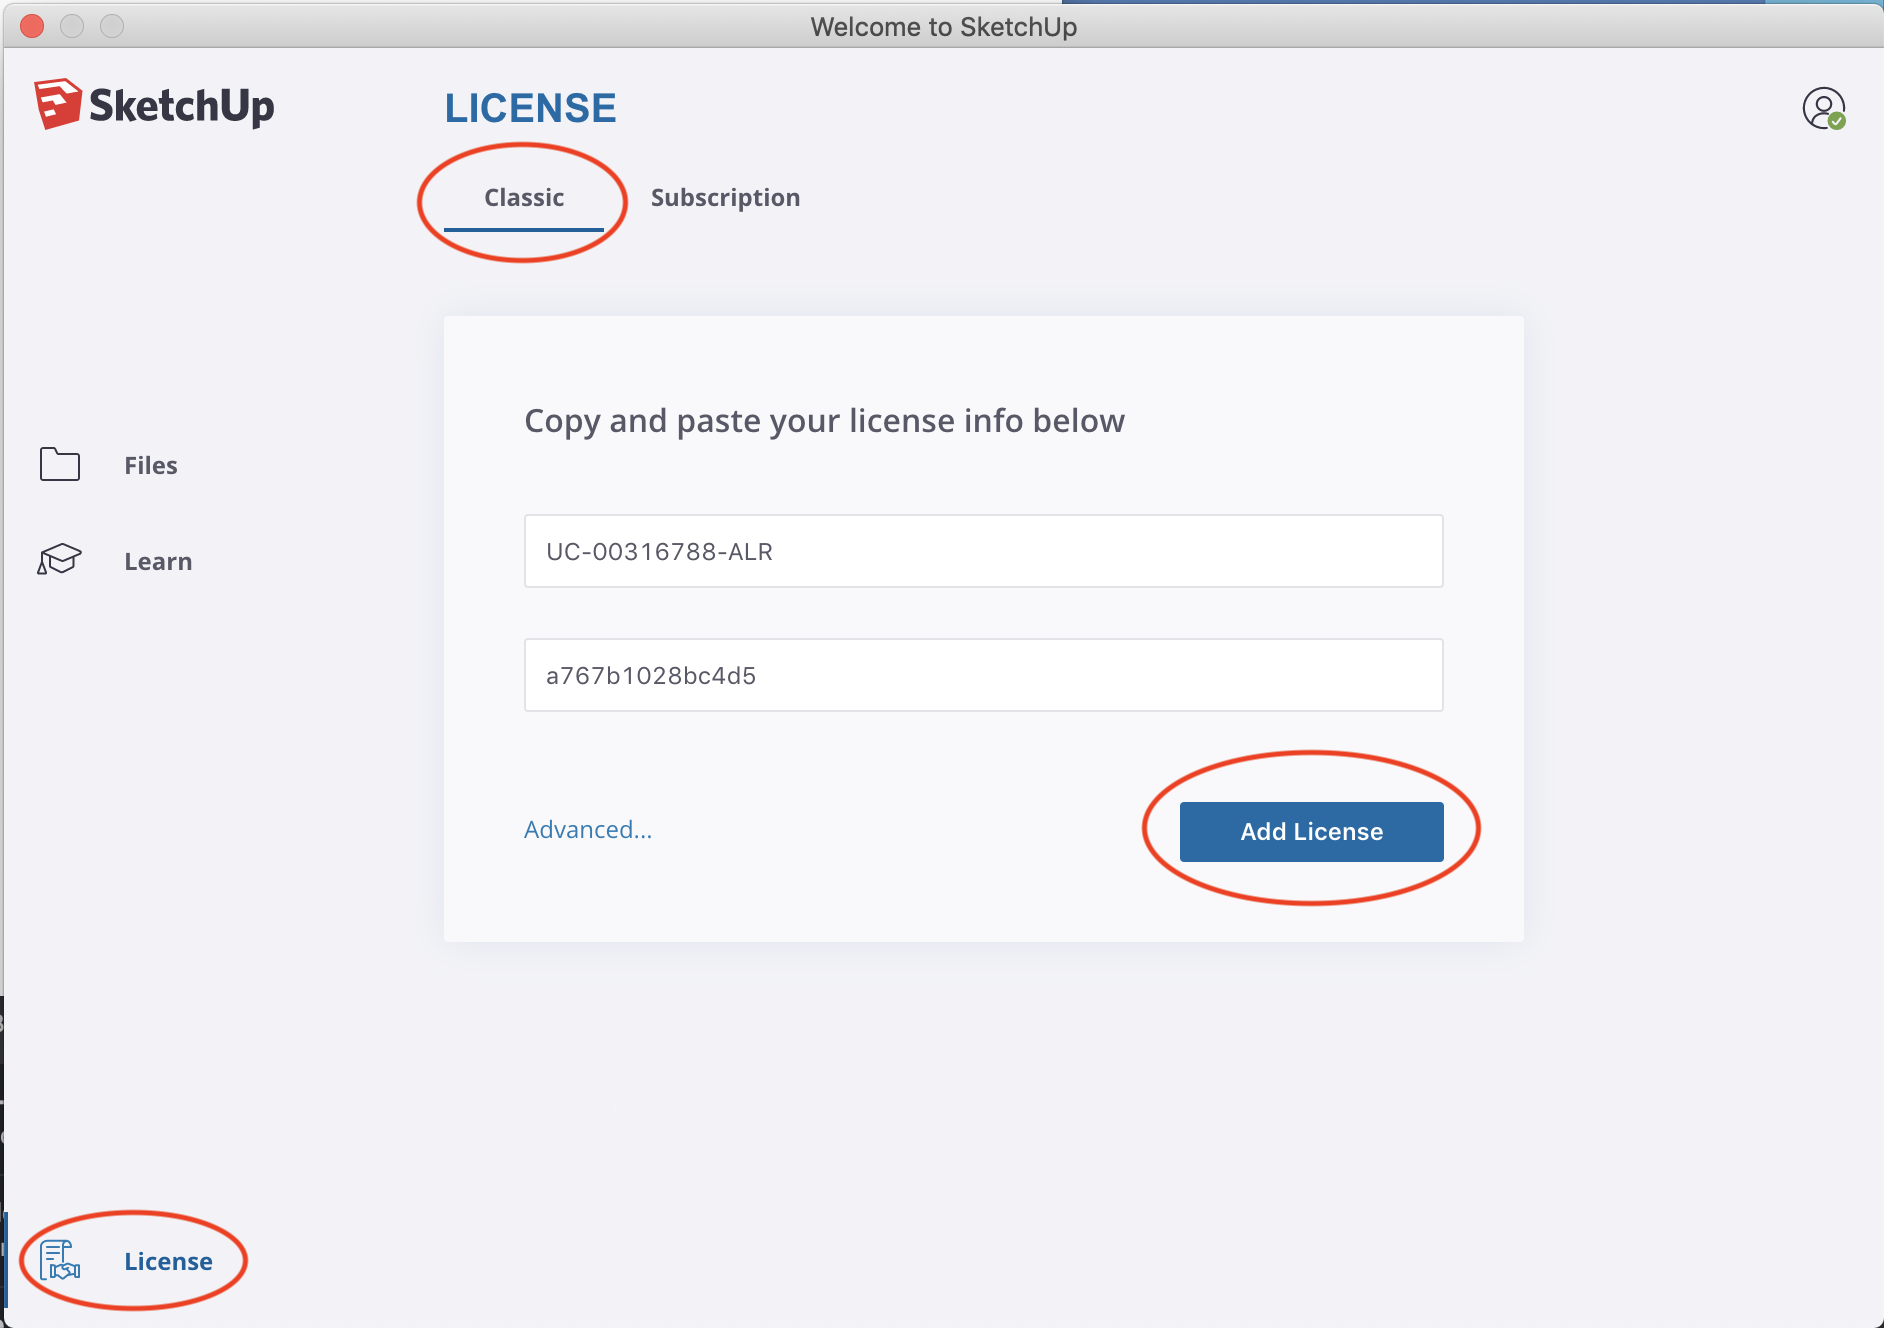 sketchup pro 2013 license key download